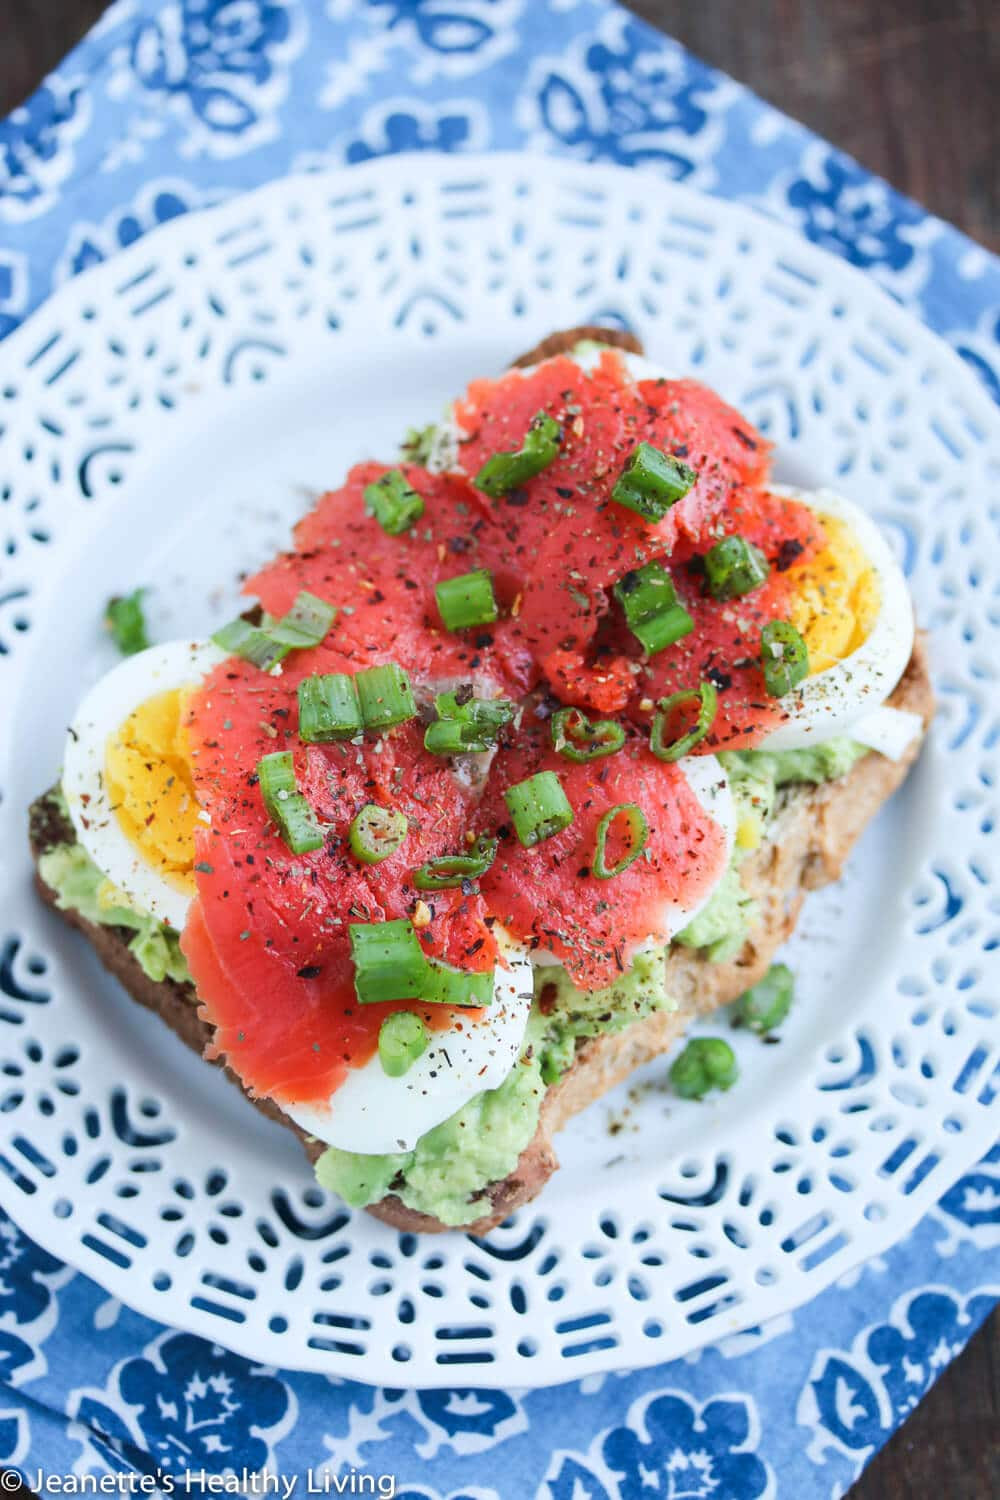 Smoked Salmon Breakfast Recipes Healthy
 Smashed Avocado Toast with Egg and Smoked Salmon